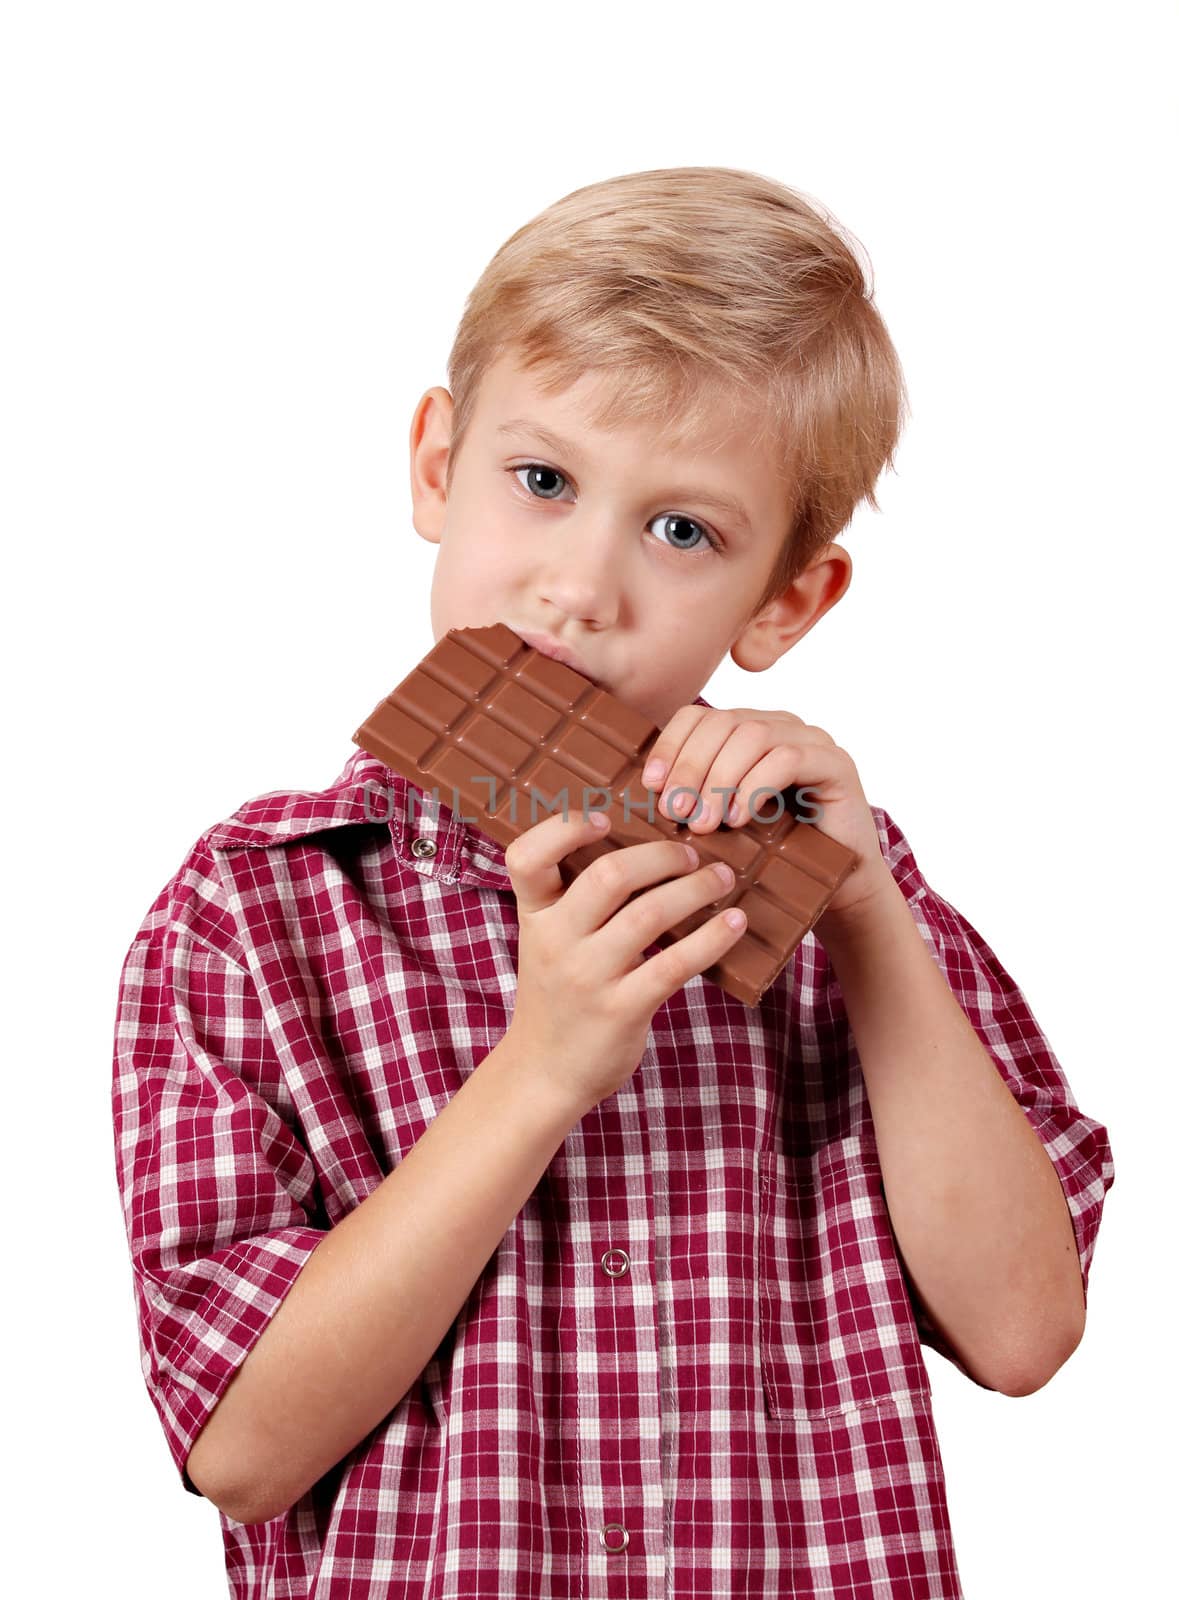 boy eat chocolate on white